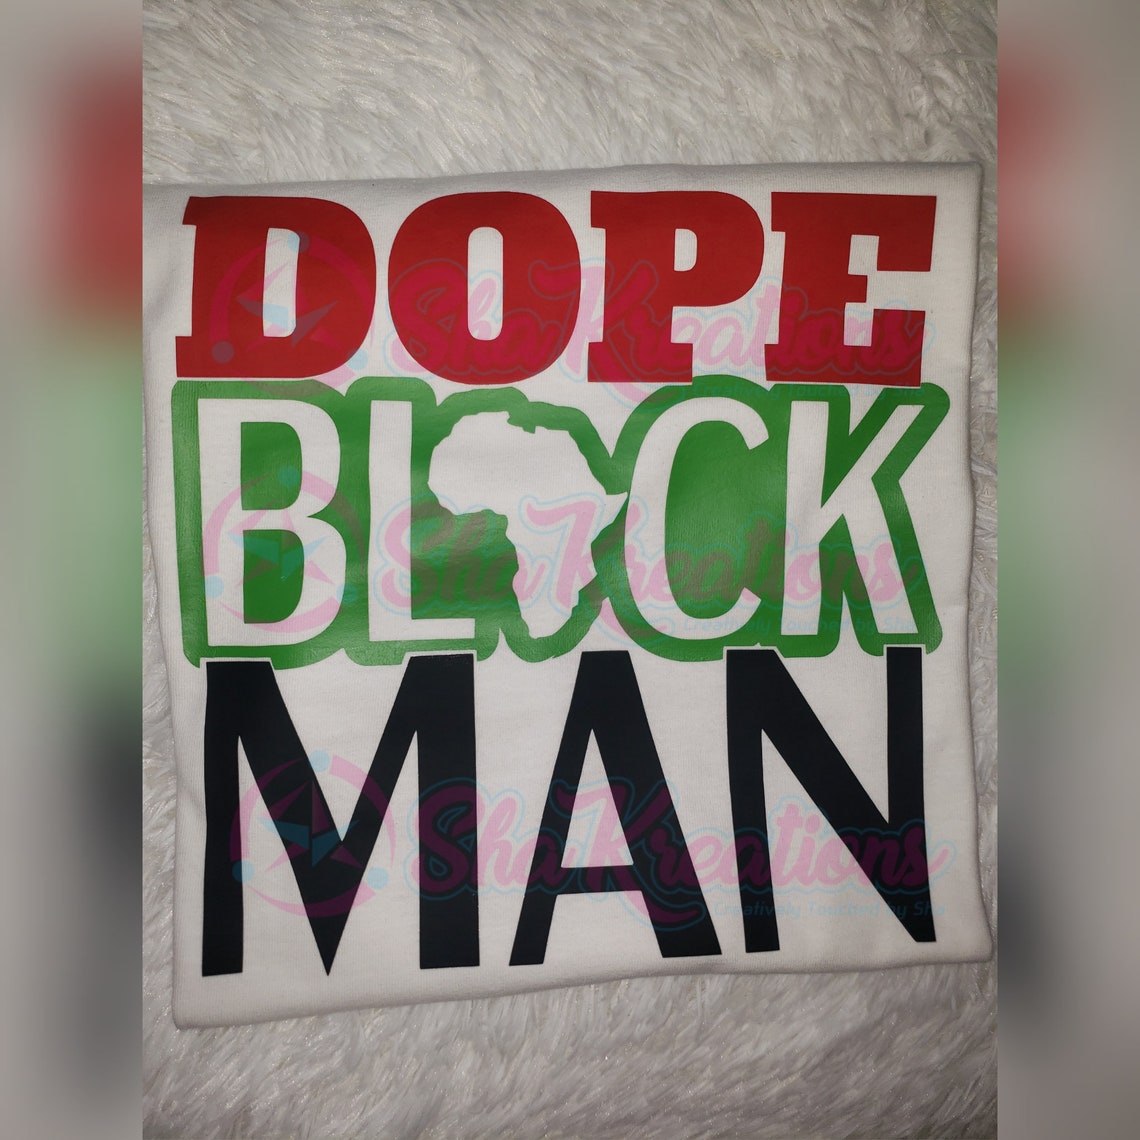 Dope Black Man/ Blsck History Month/ Black Power/ BLM / Black Etsy pic